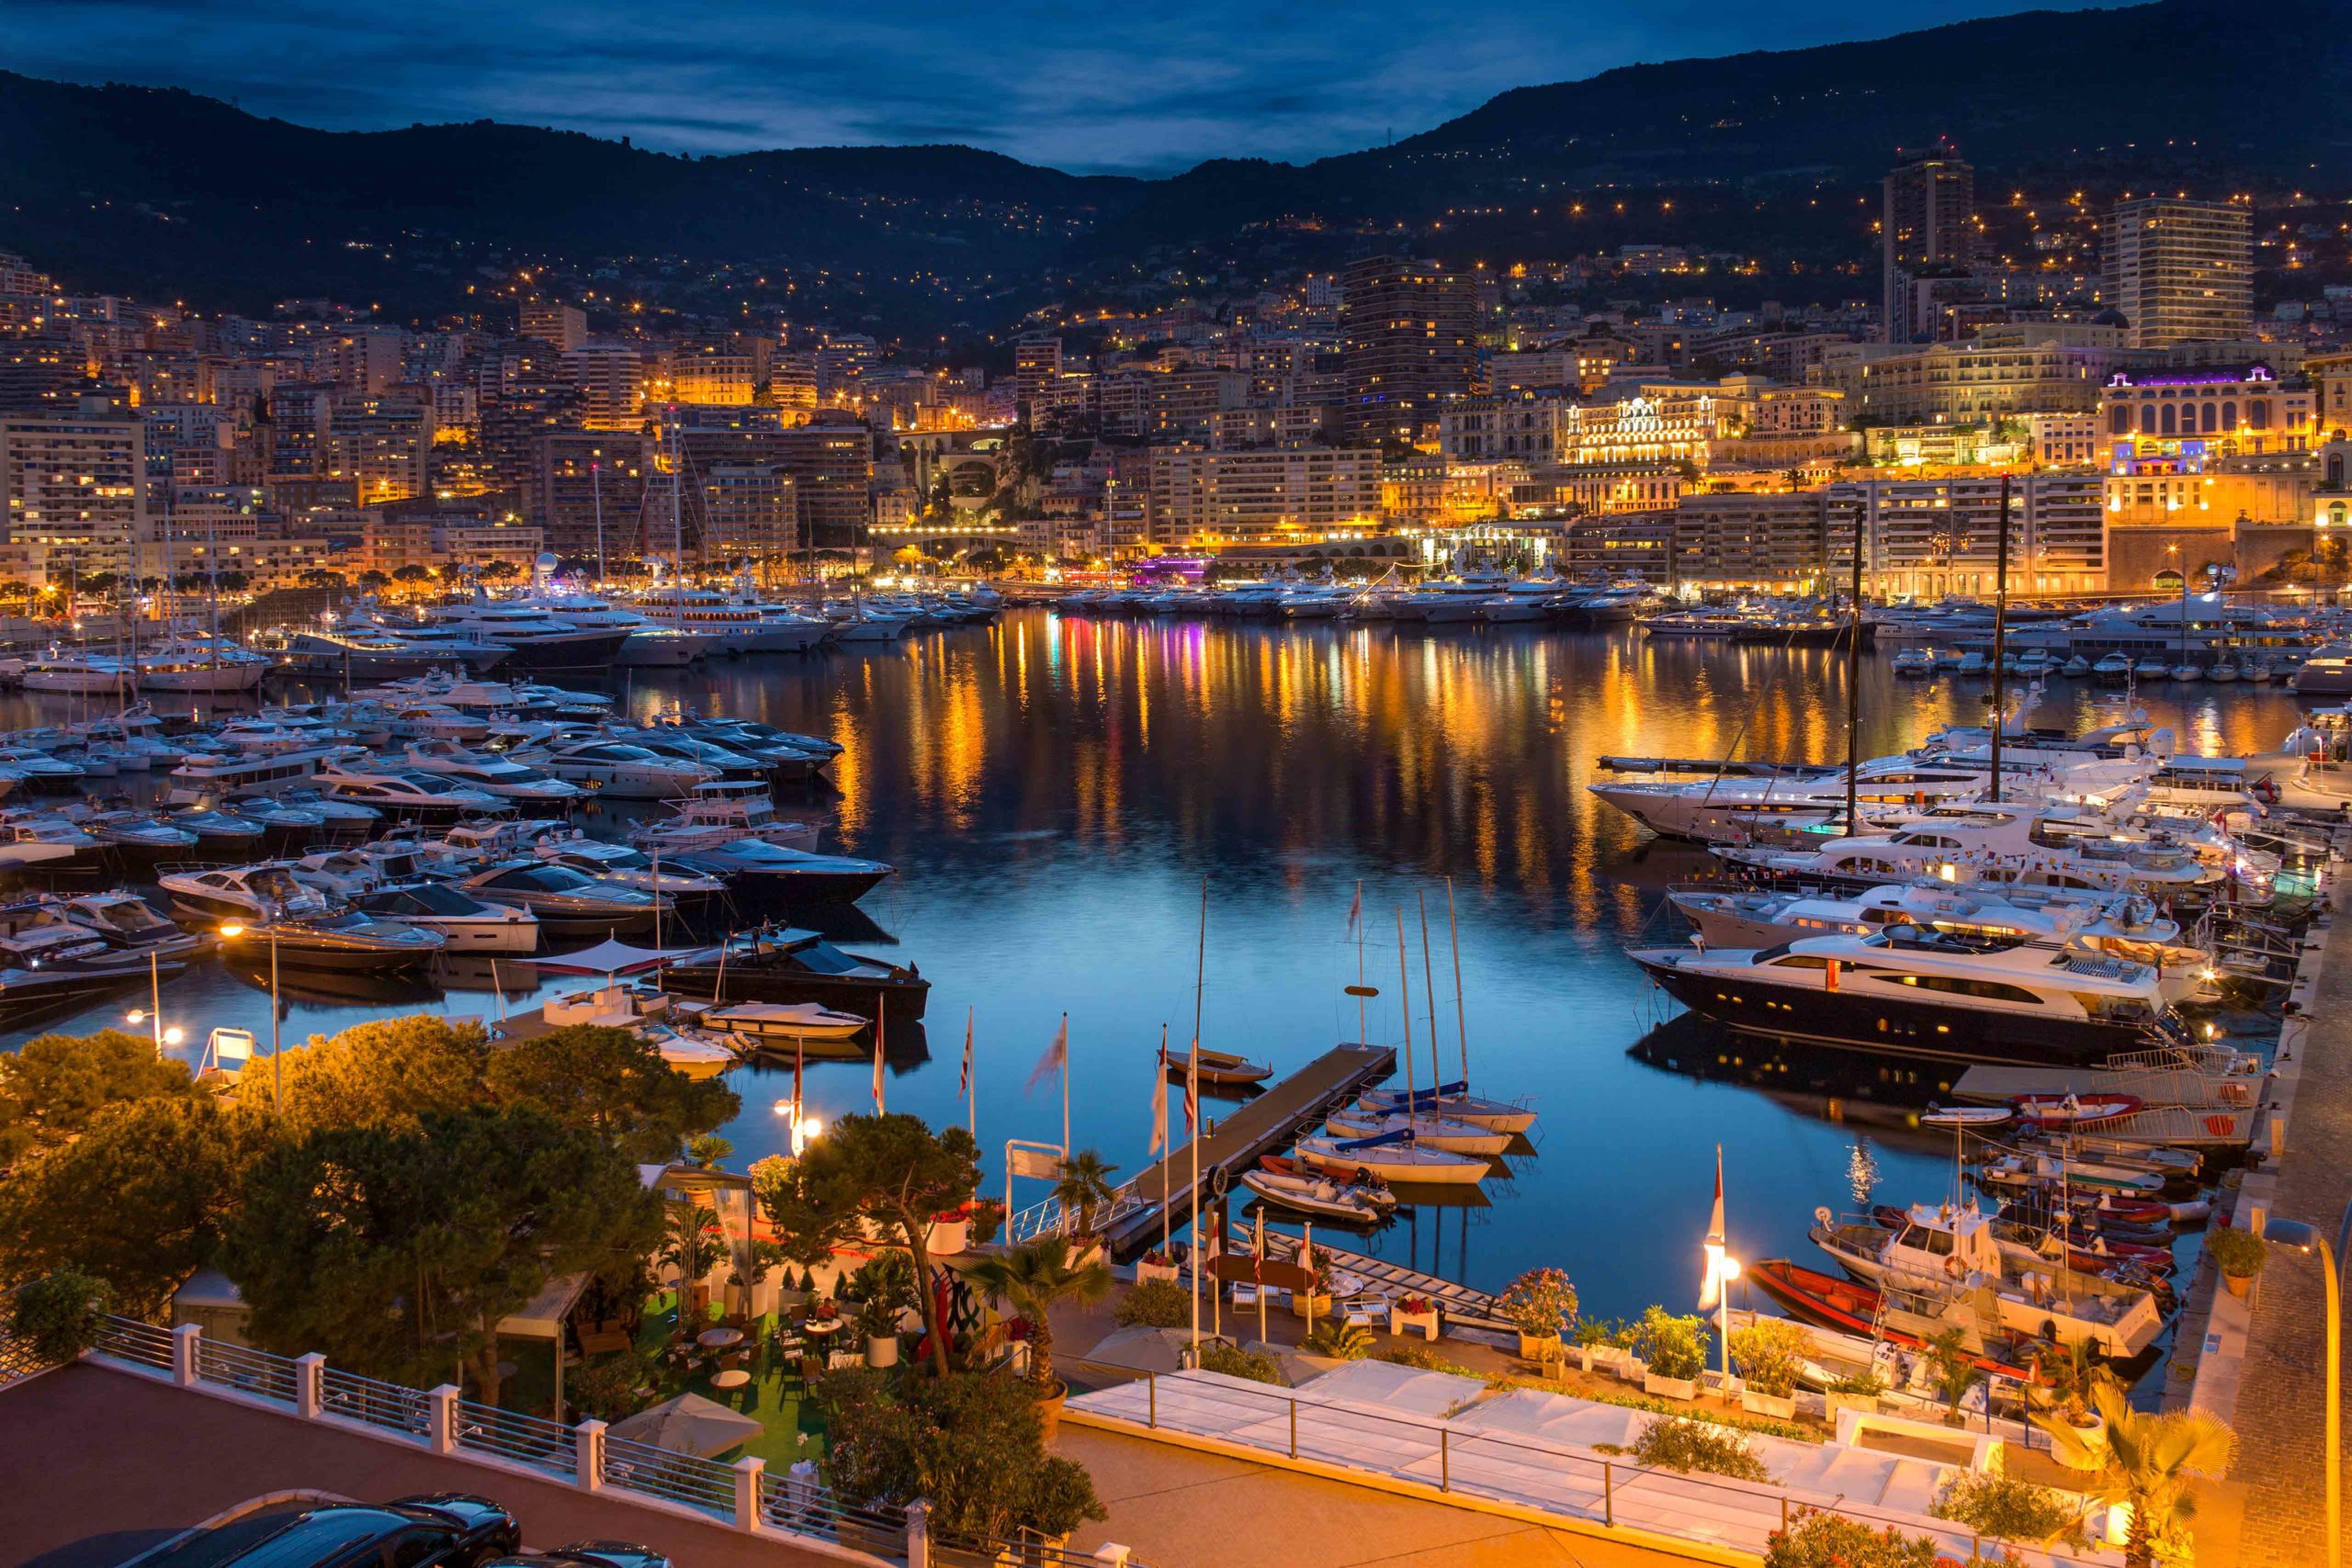 Monaco by night. Photo: @SteveAllenPhoto999 via Envato Elements